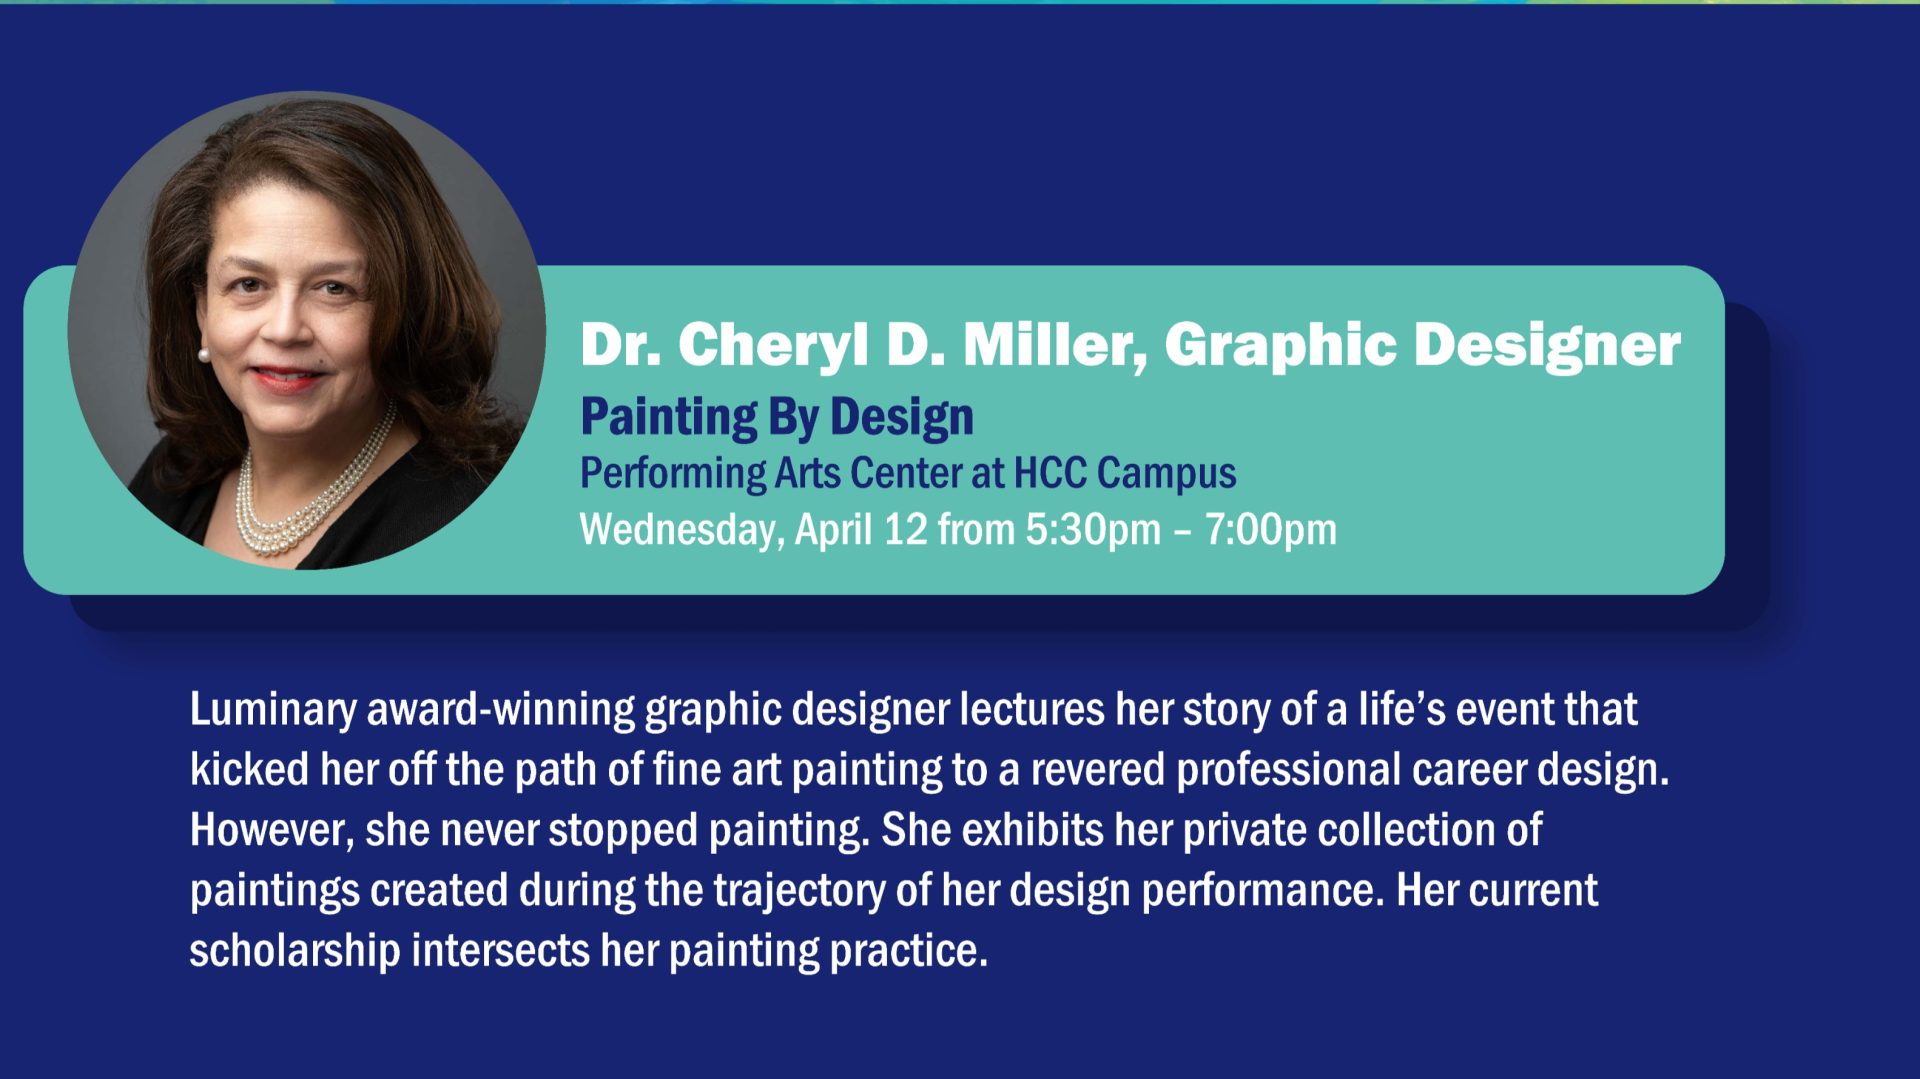 Spring Speaker Series | “Painting By Design” by Dr. Cheryl D. Miller